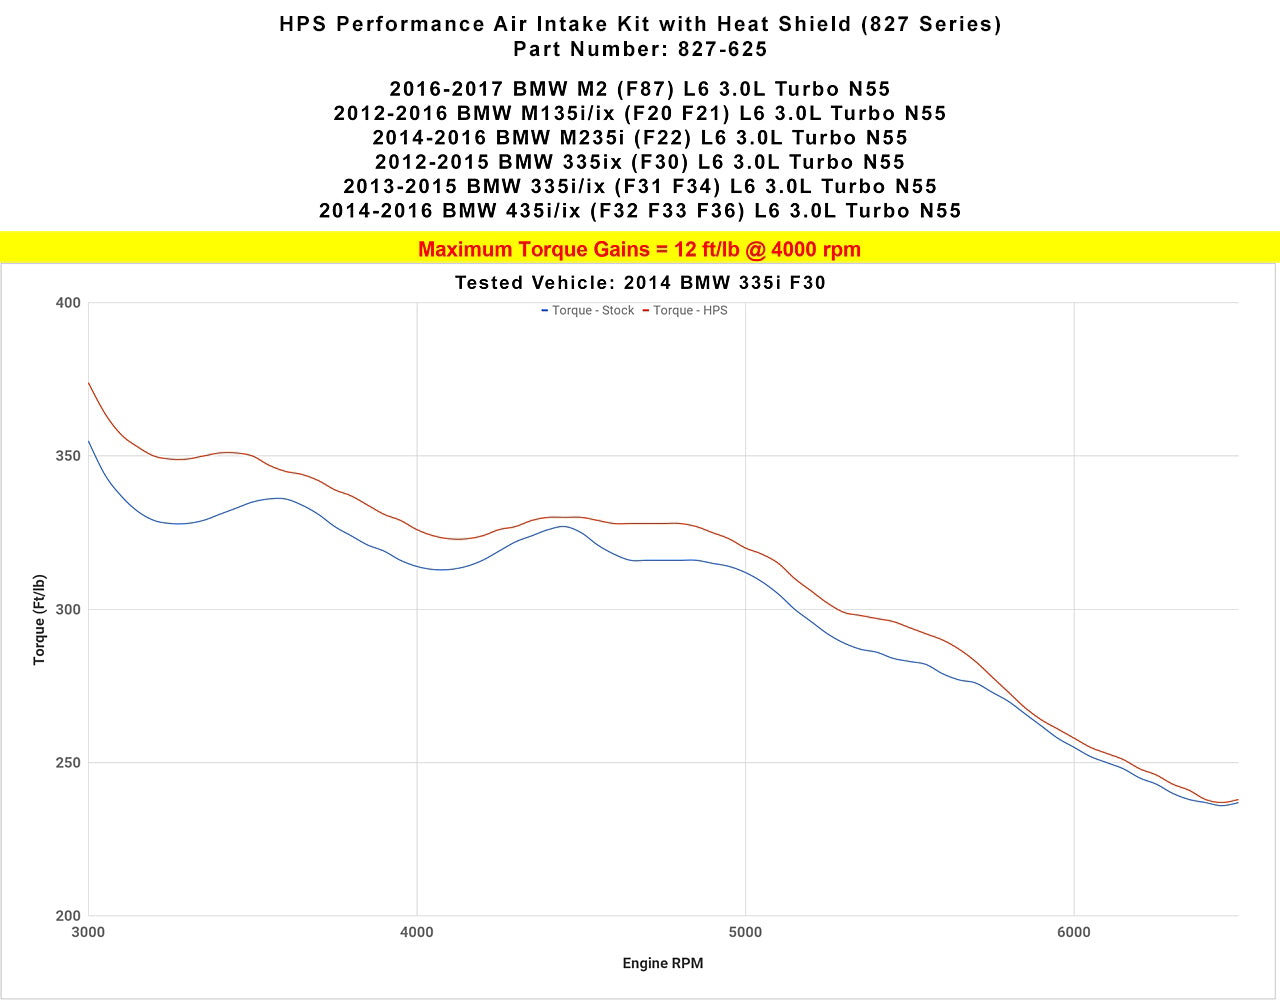 Dyno proven gains 12 ft/lb HPS Performance Shortram Air Intake Kit 2012-2015 BMW 335ix F30 3.0L Turbo N55 827-625BL